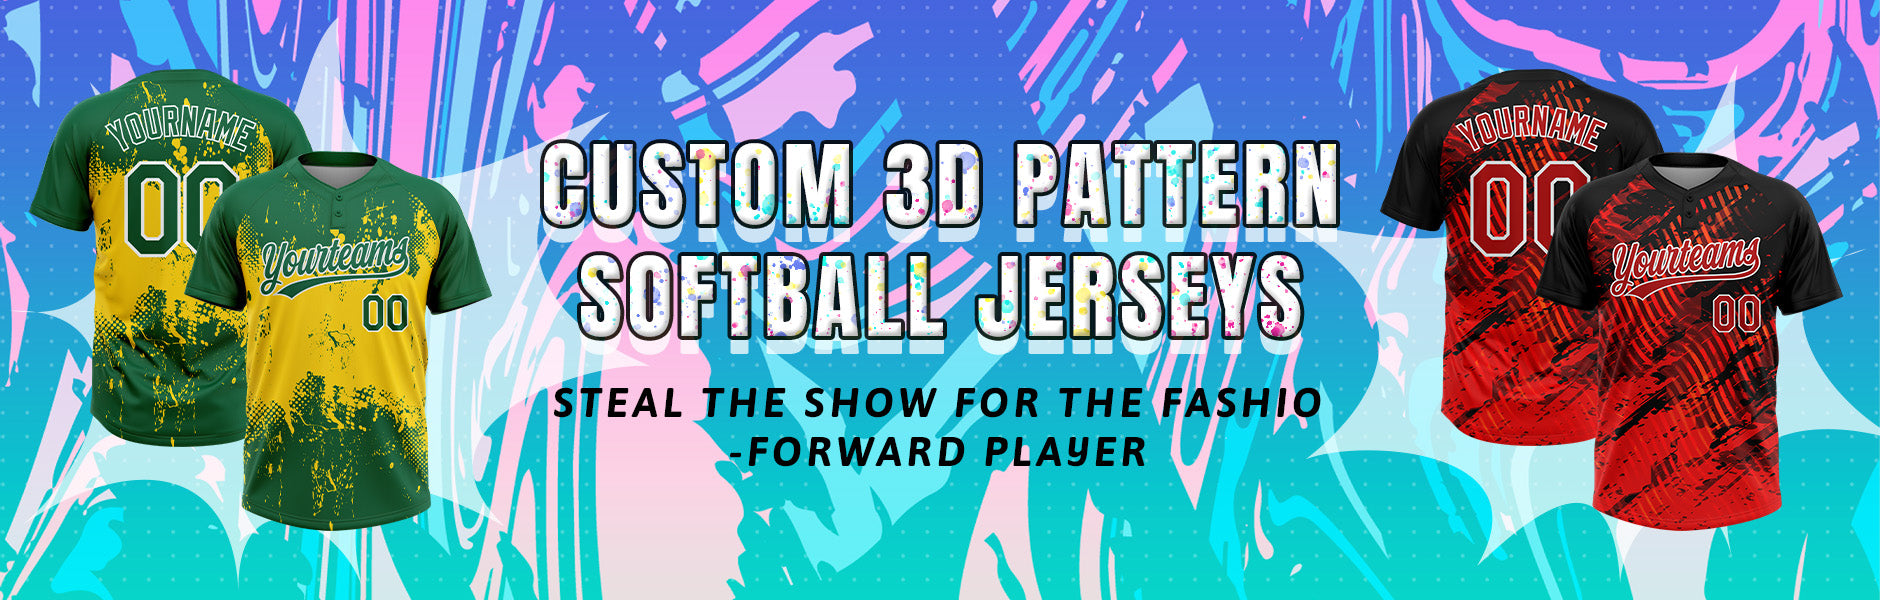 Custom  3d pattern softball jersey